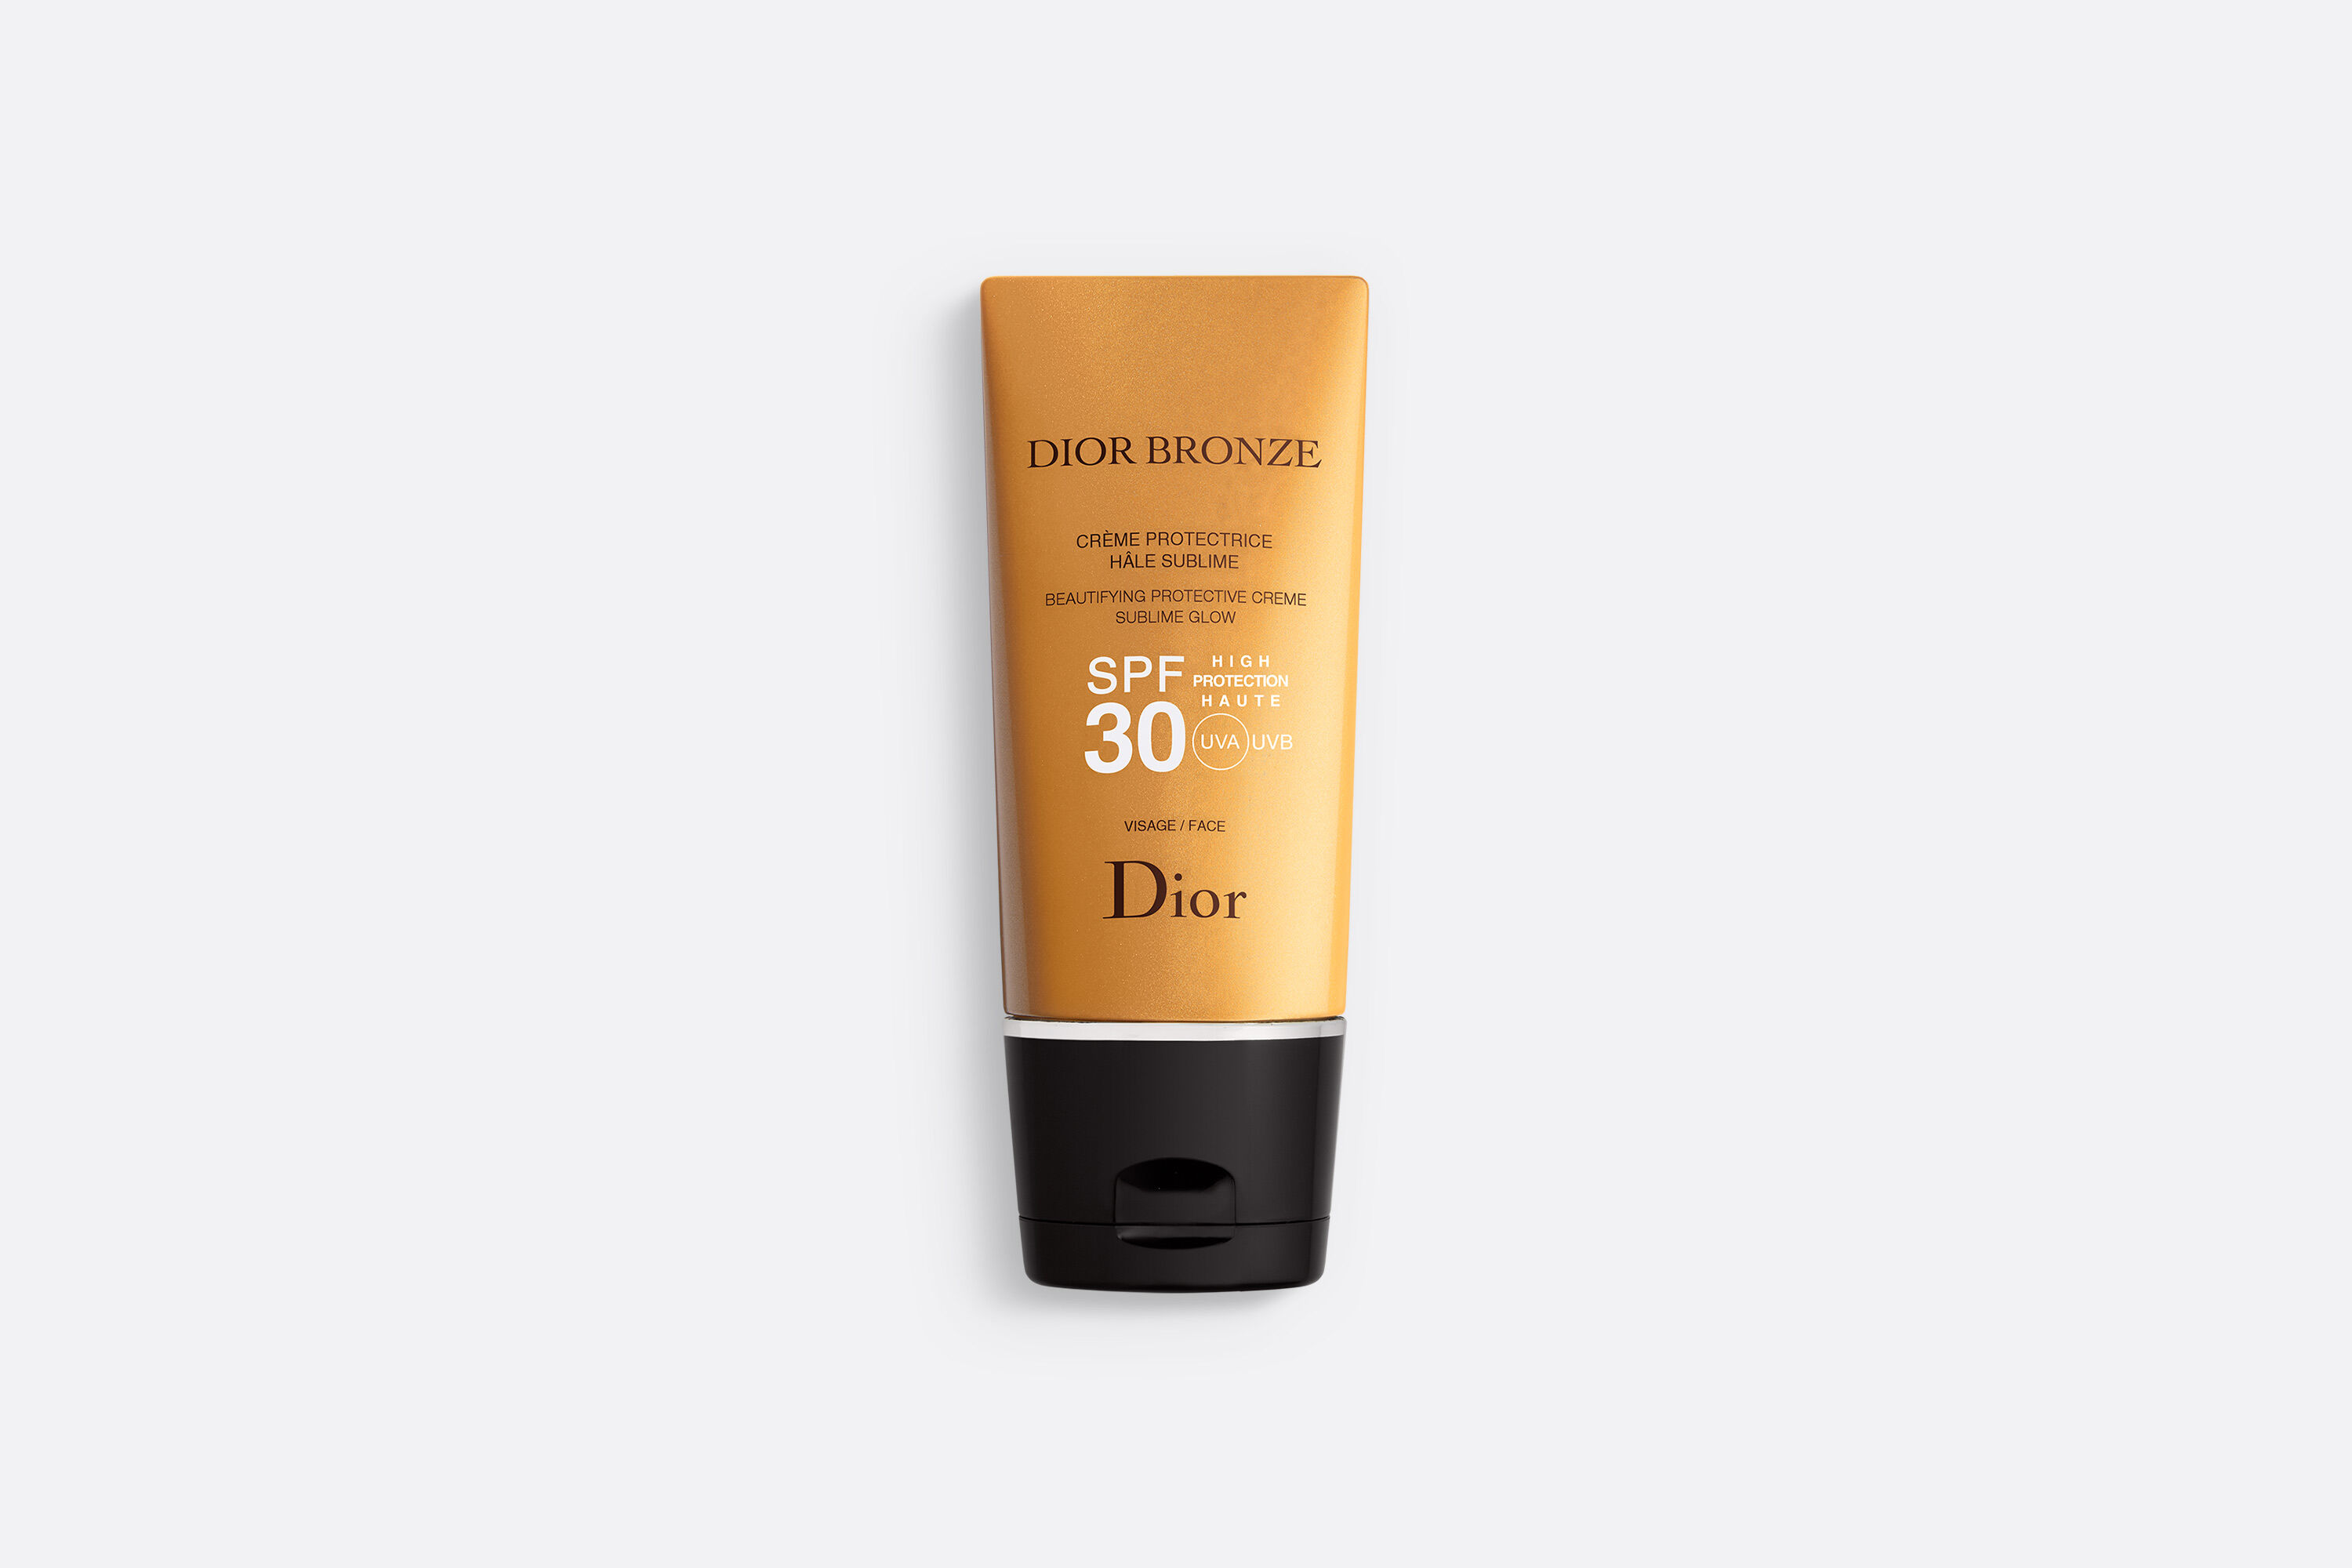 DIOR Dior Bronze Beautifying Protective Creme Sublime Glow protective face  cream SPF 30  notinocouk